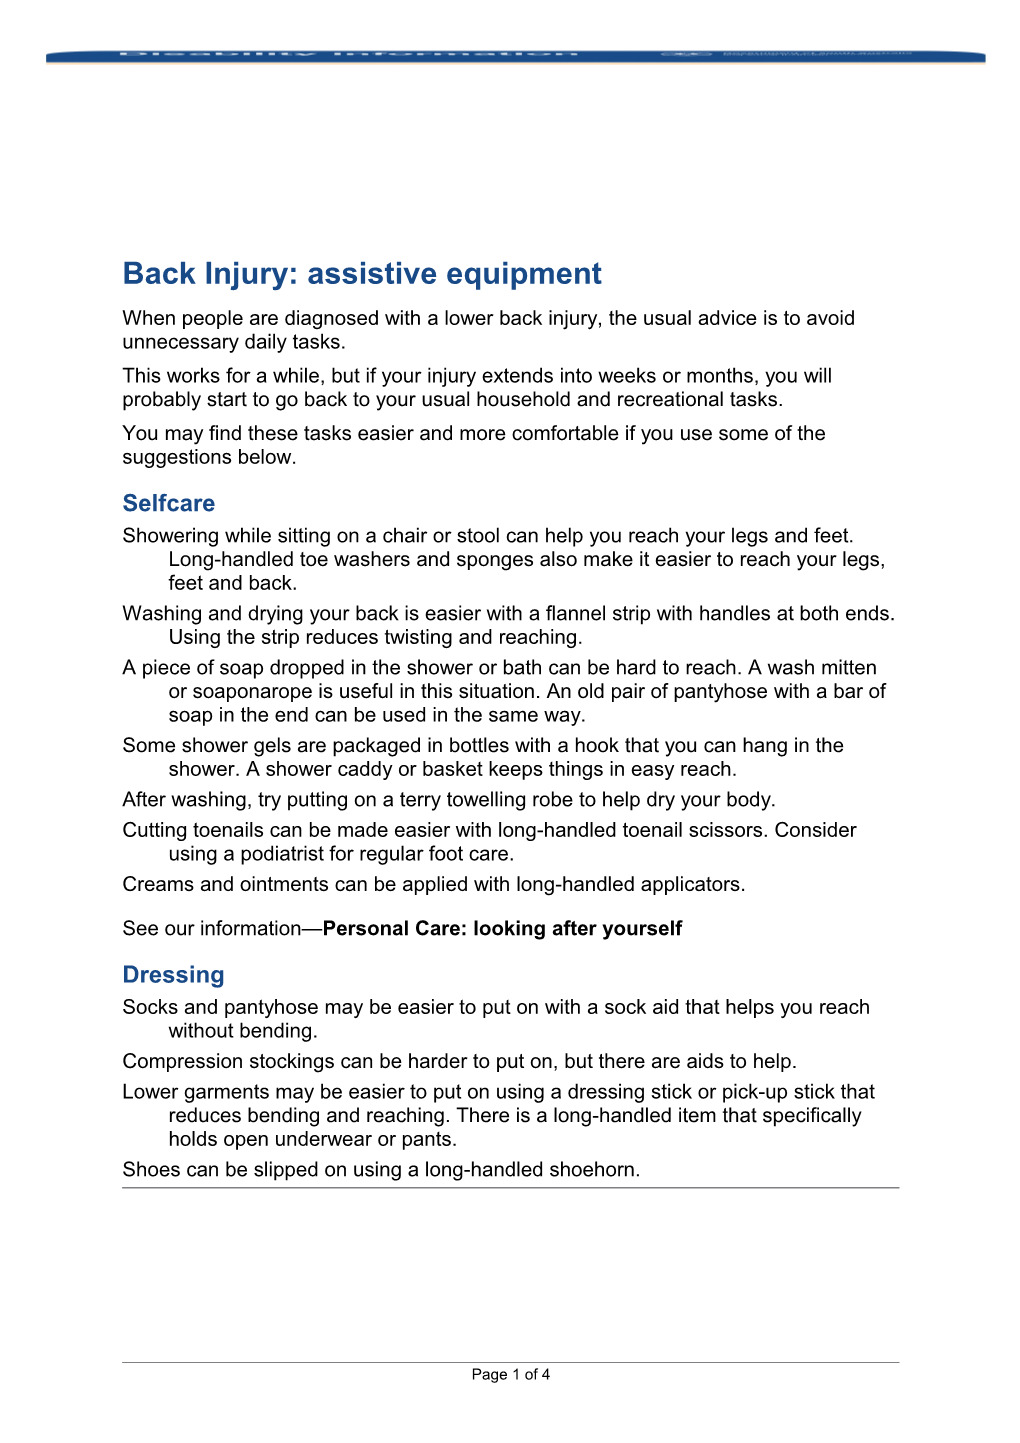 Back Injury: Assistive Equipment